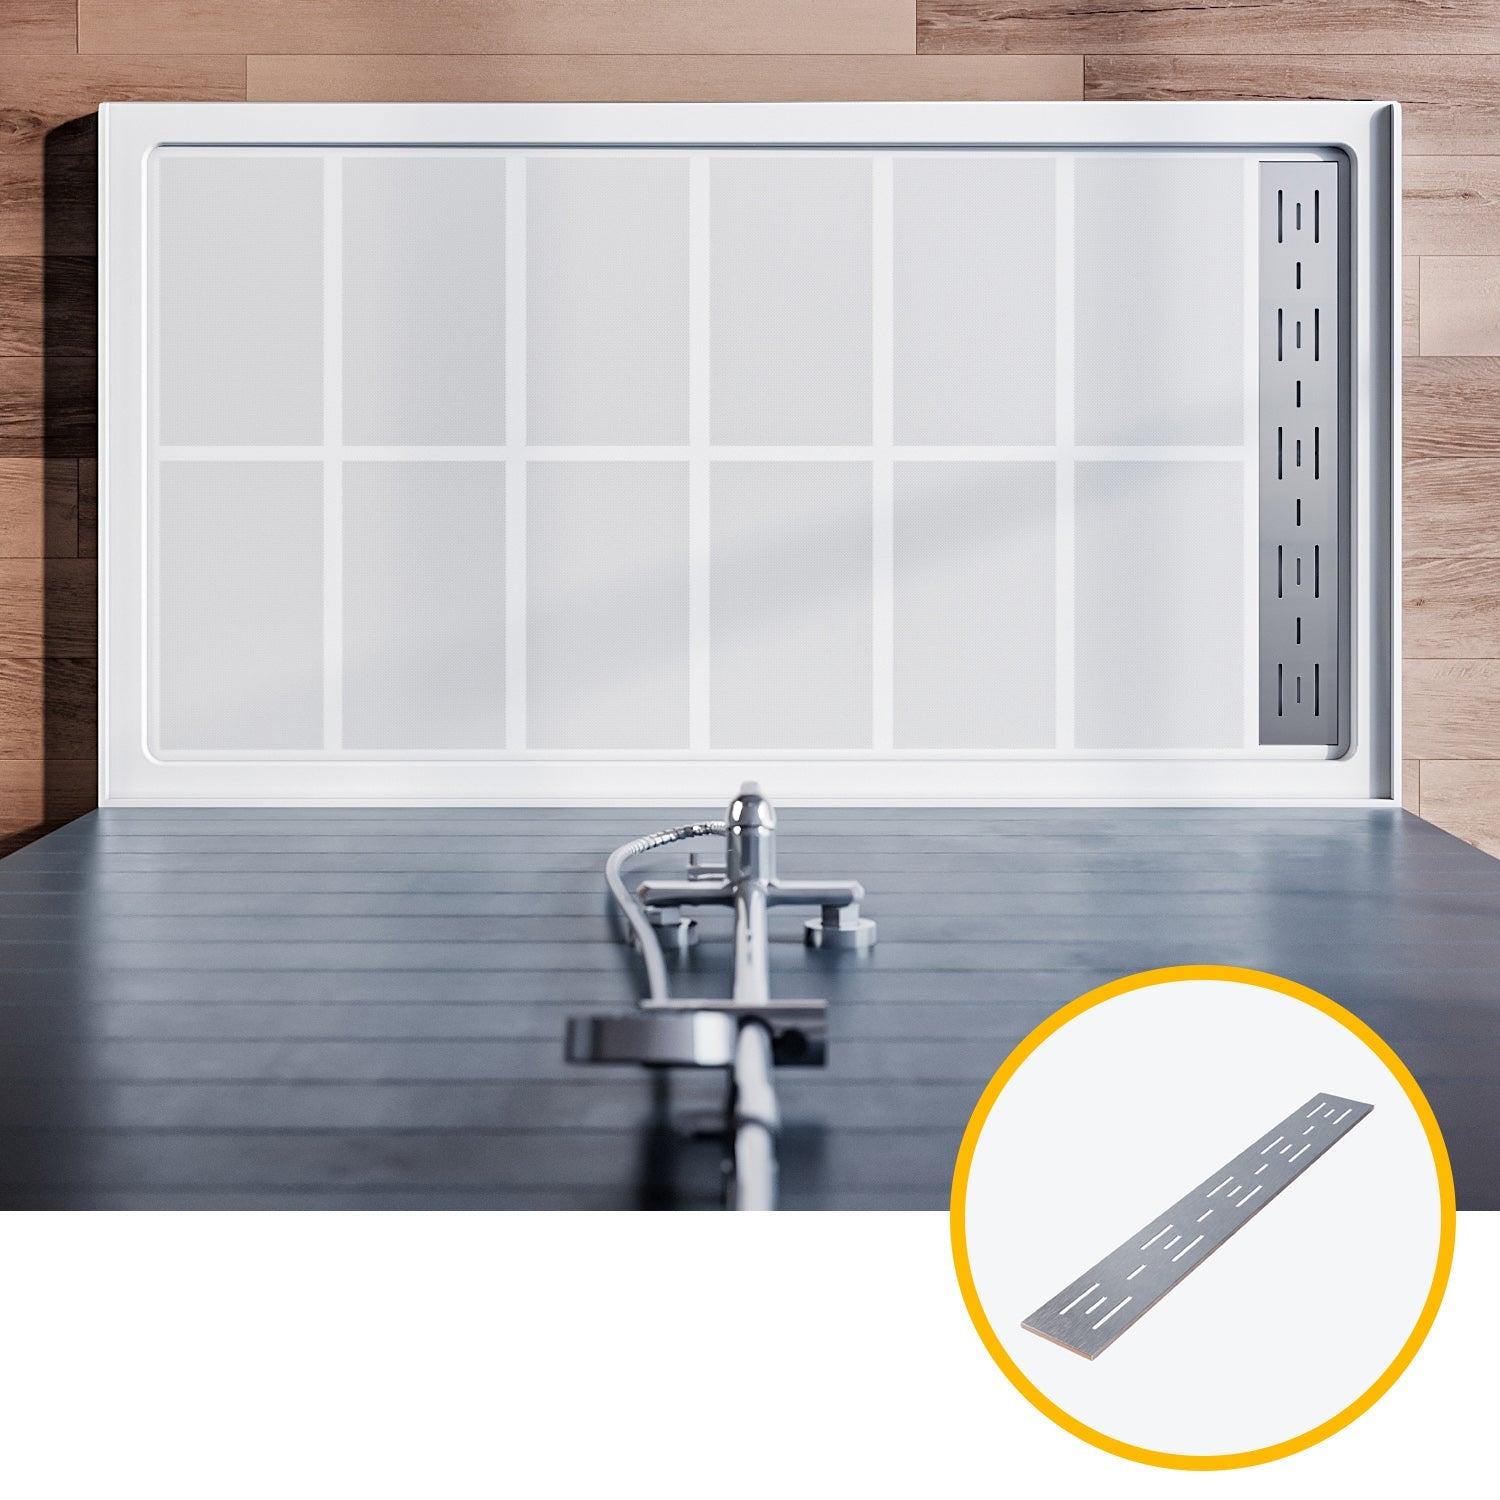 SL4U Shower Sheet Molding Compound(SMC) Shower Base for 60 x 32 Inch Shower Enclosure, Left Shower Drain Included, 32"D x 60"W x 4"H Shower Tray Base, White.